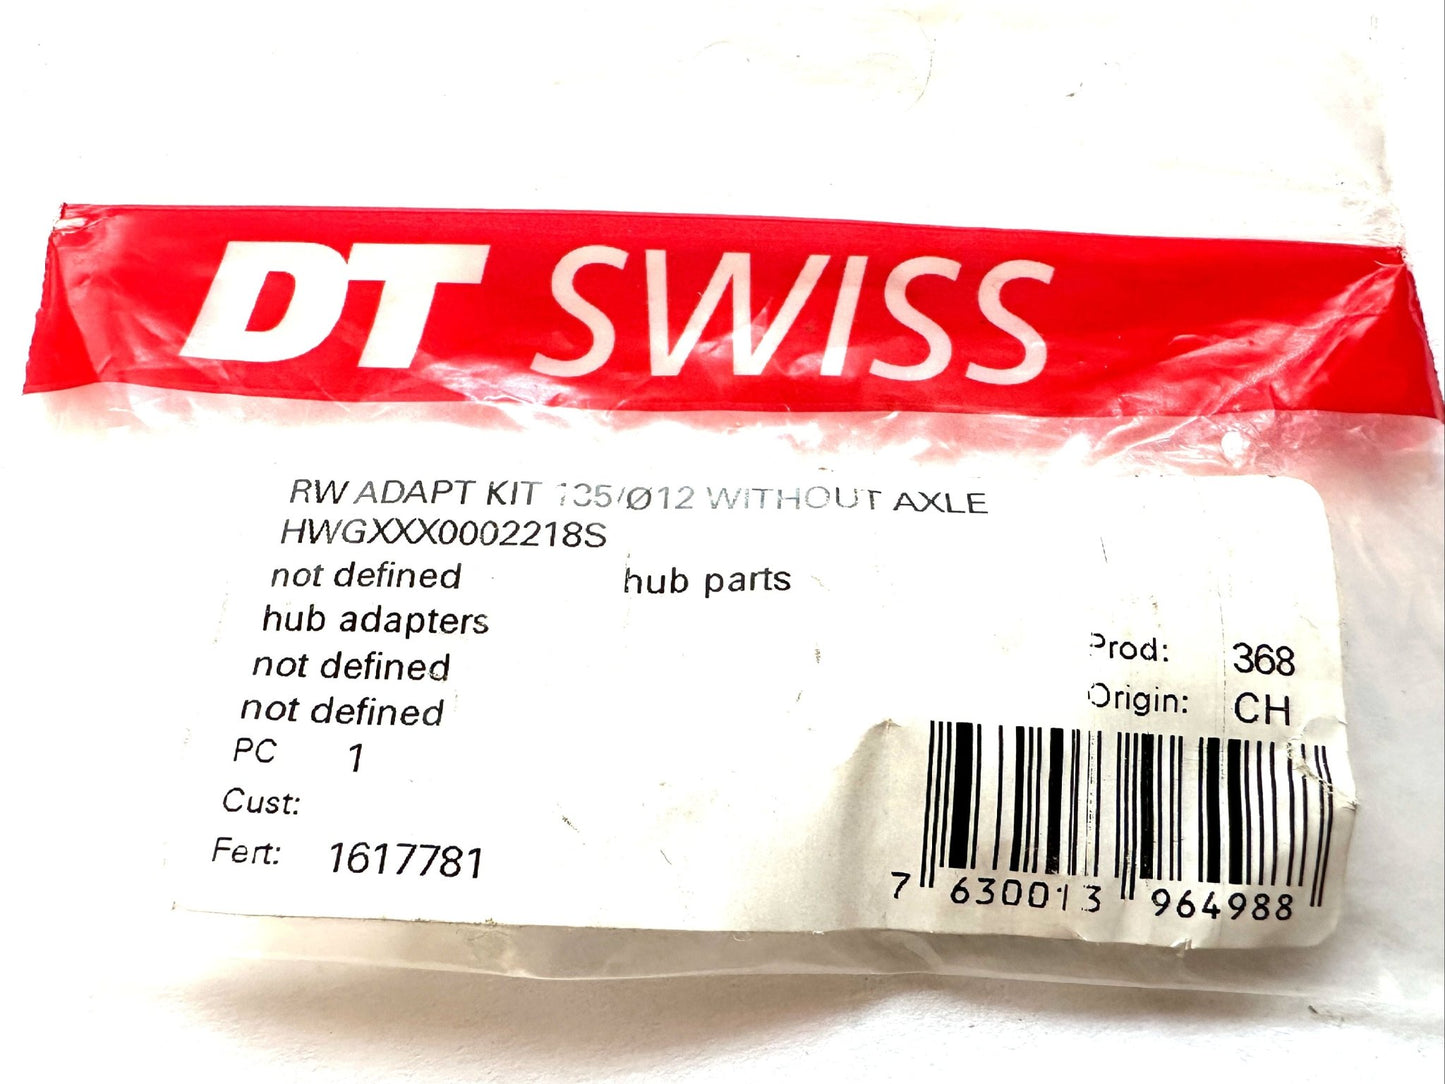 DT Swiss Cycle Bike Rear Wheel Kit For Adaptors 135 MM / 12 MM 7630013964988 NEW - Random Bike Parts